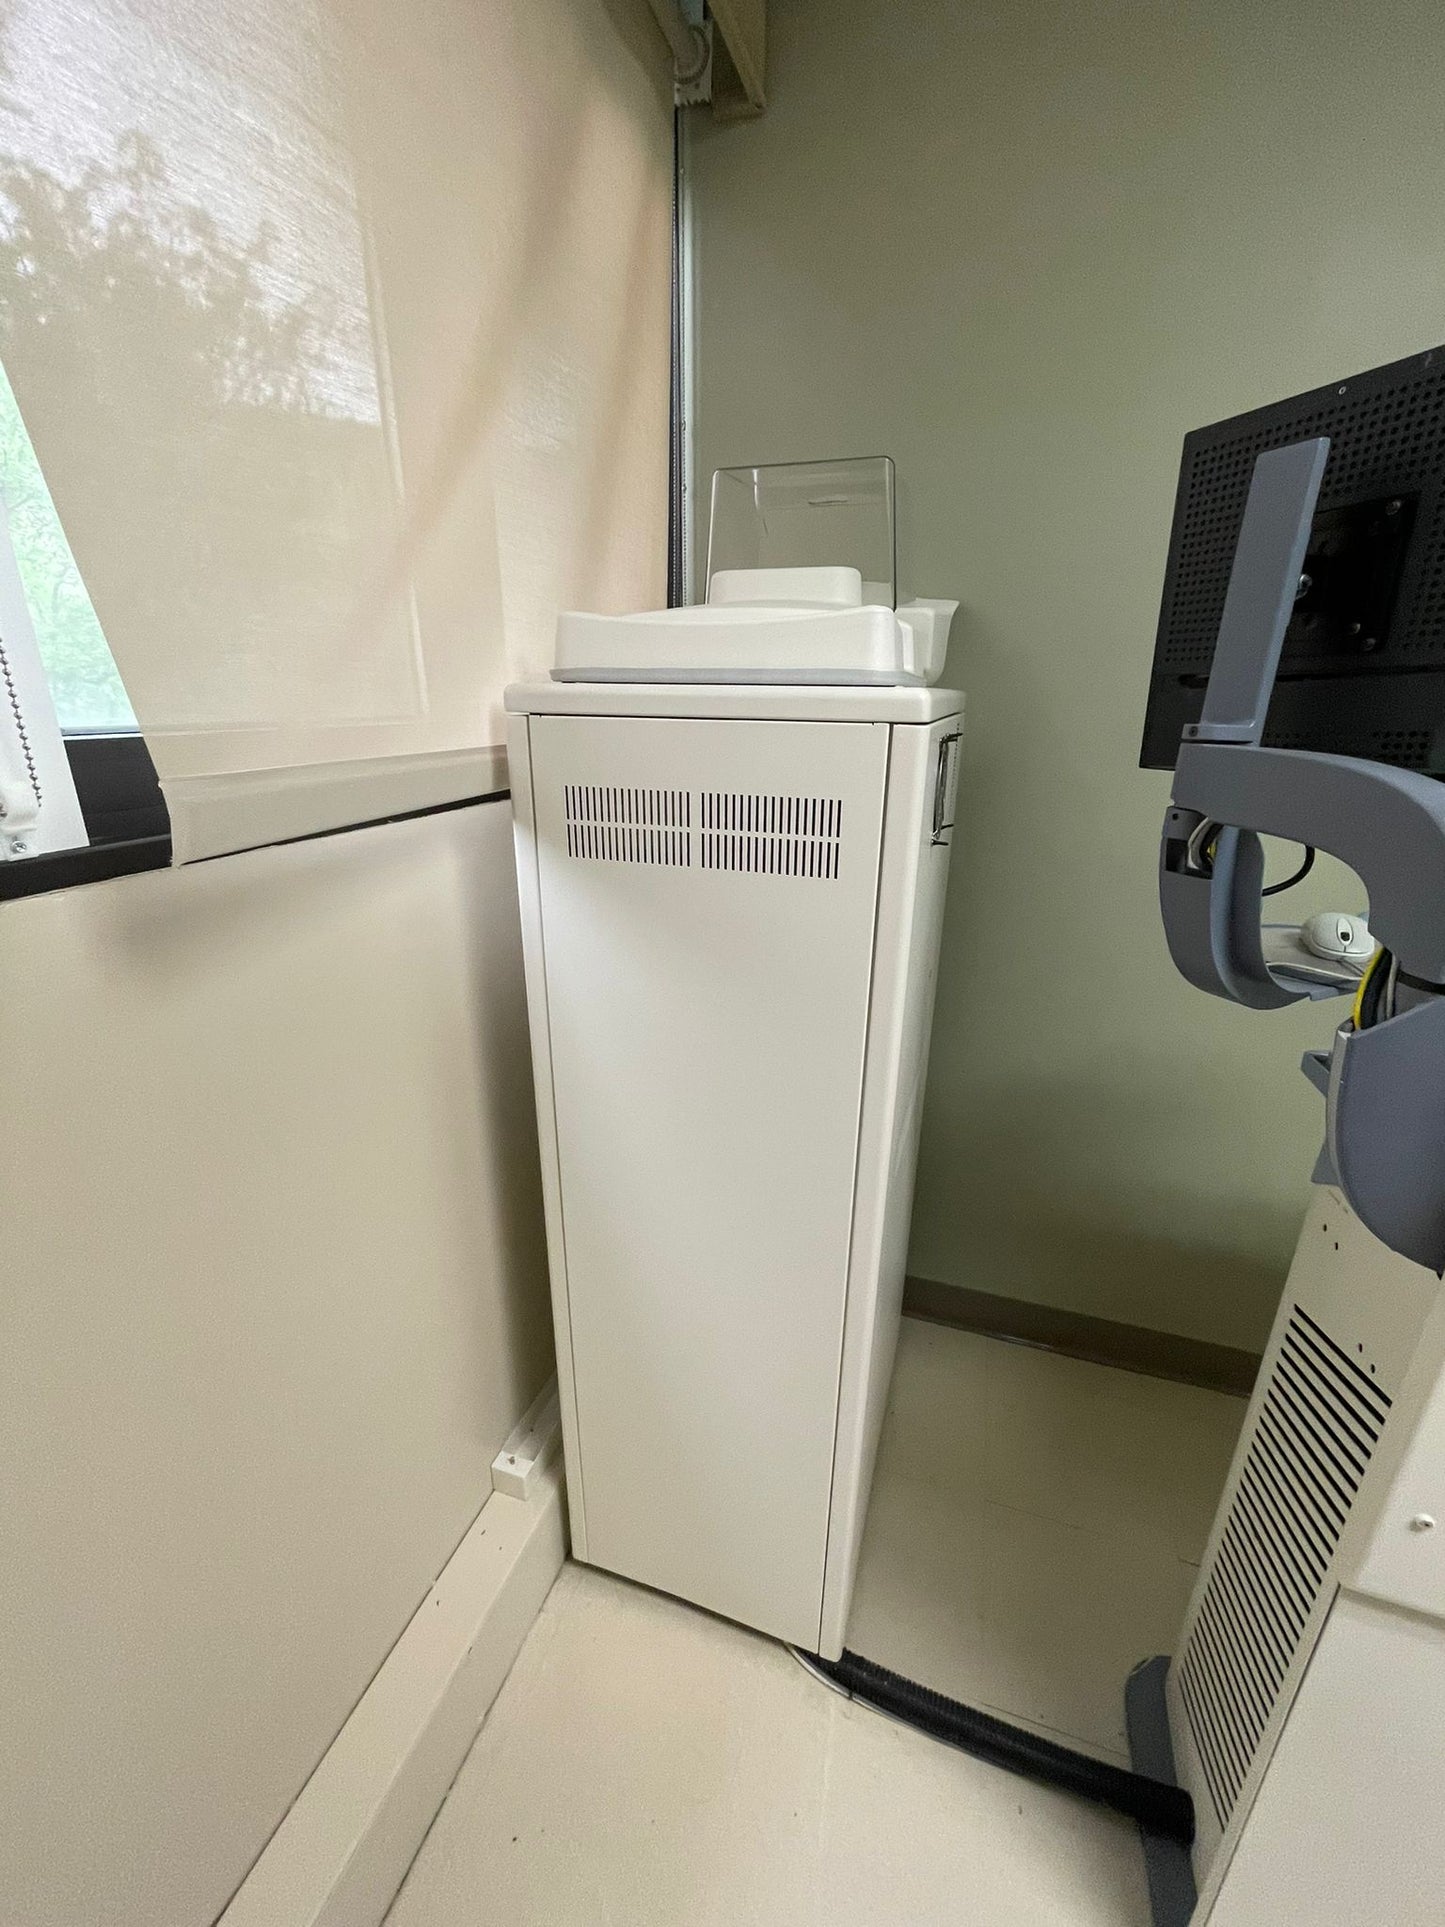 Senographe Essential Mammography - 2009